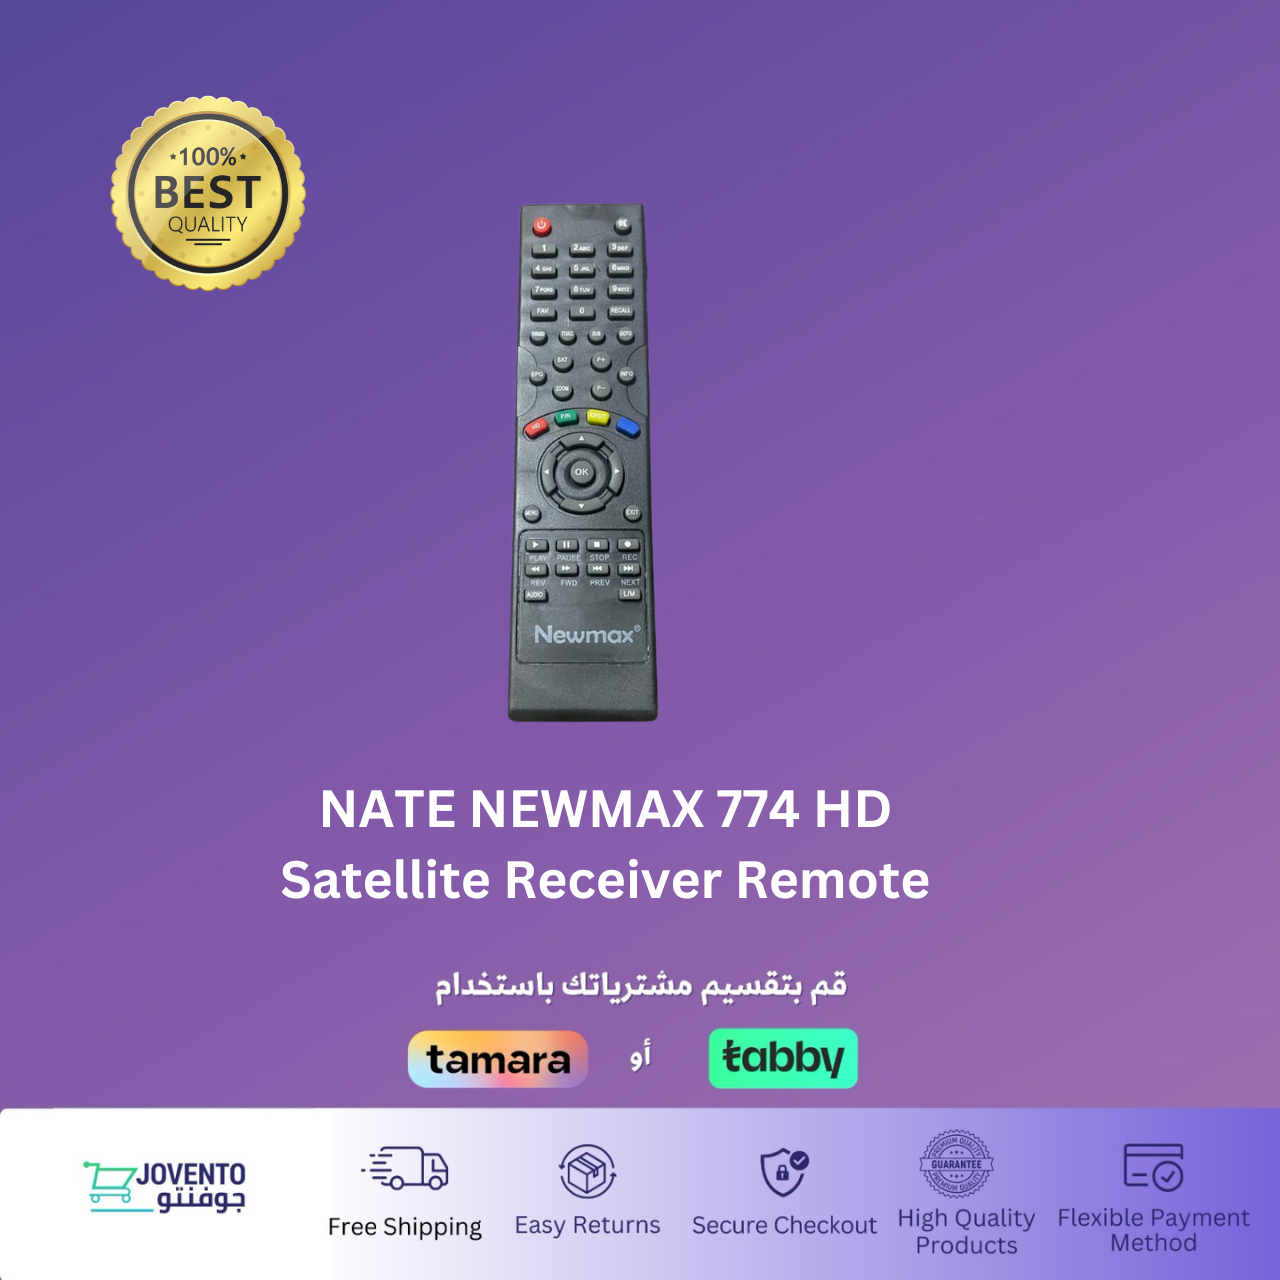 NATE NEWMAX 774 HD Satellite Receiver Remote